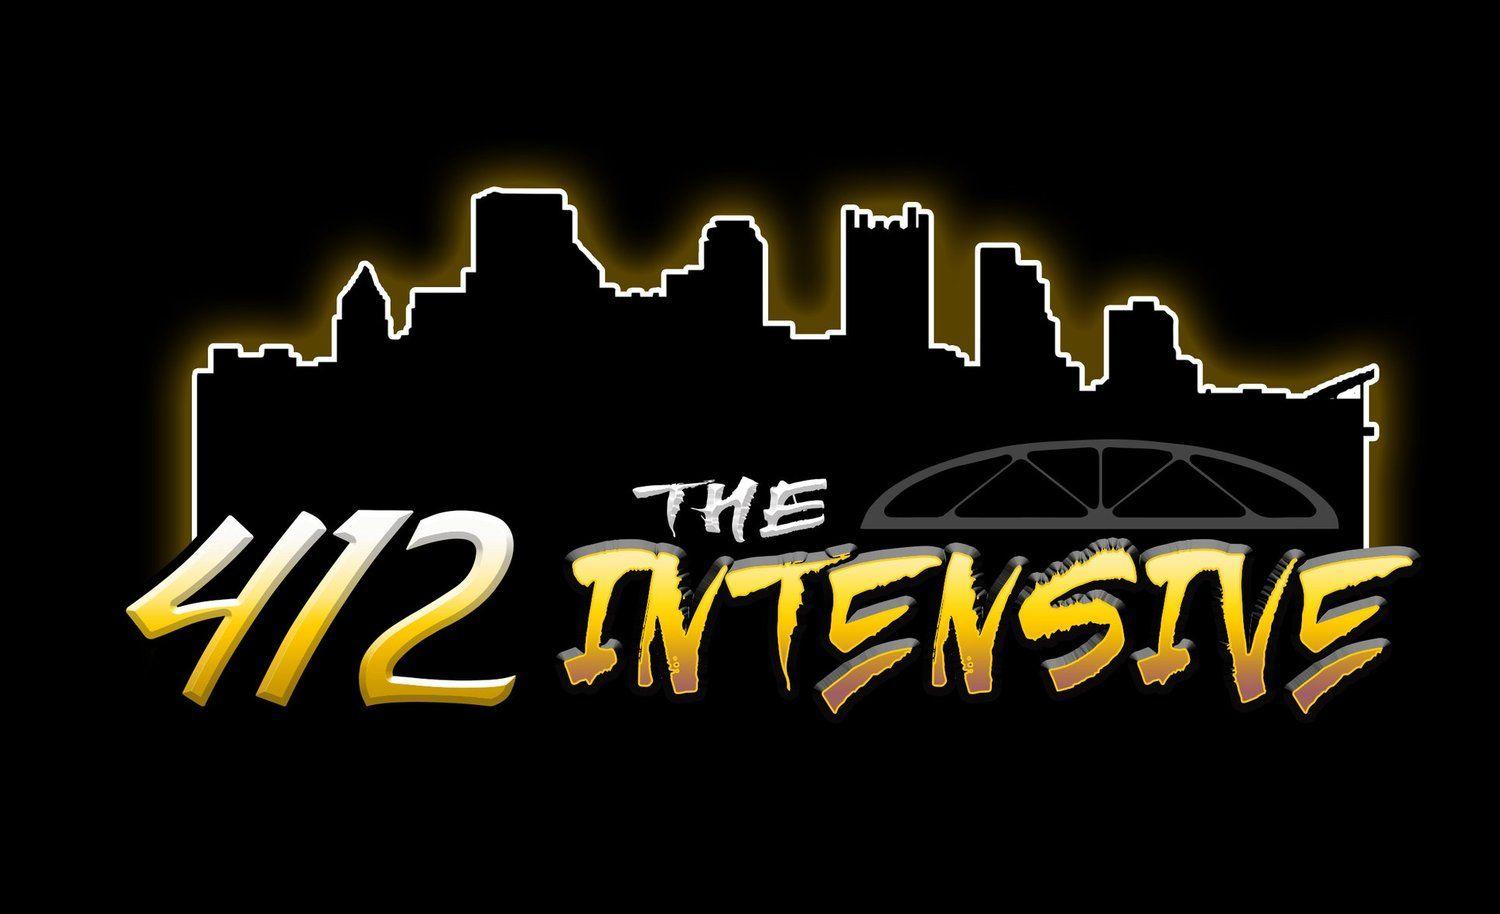 Intensive Logo - 412TheIntensive